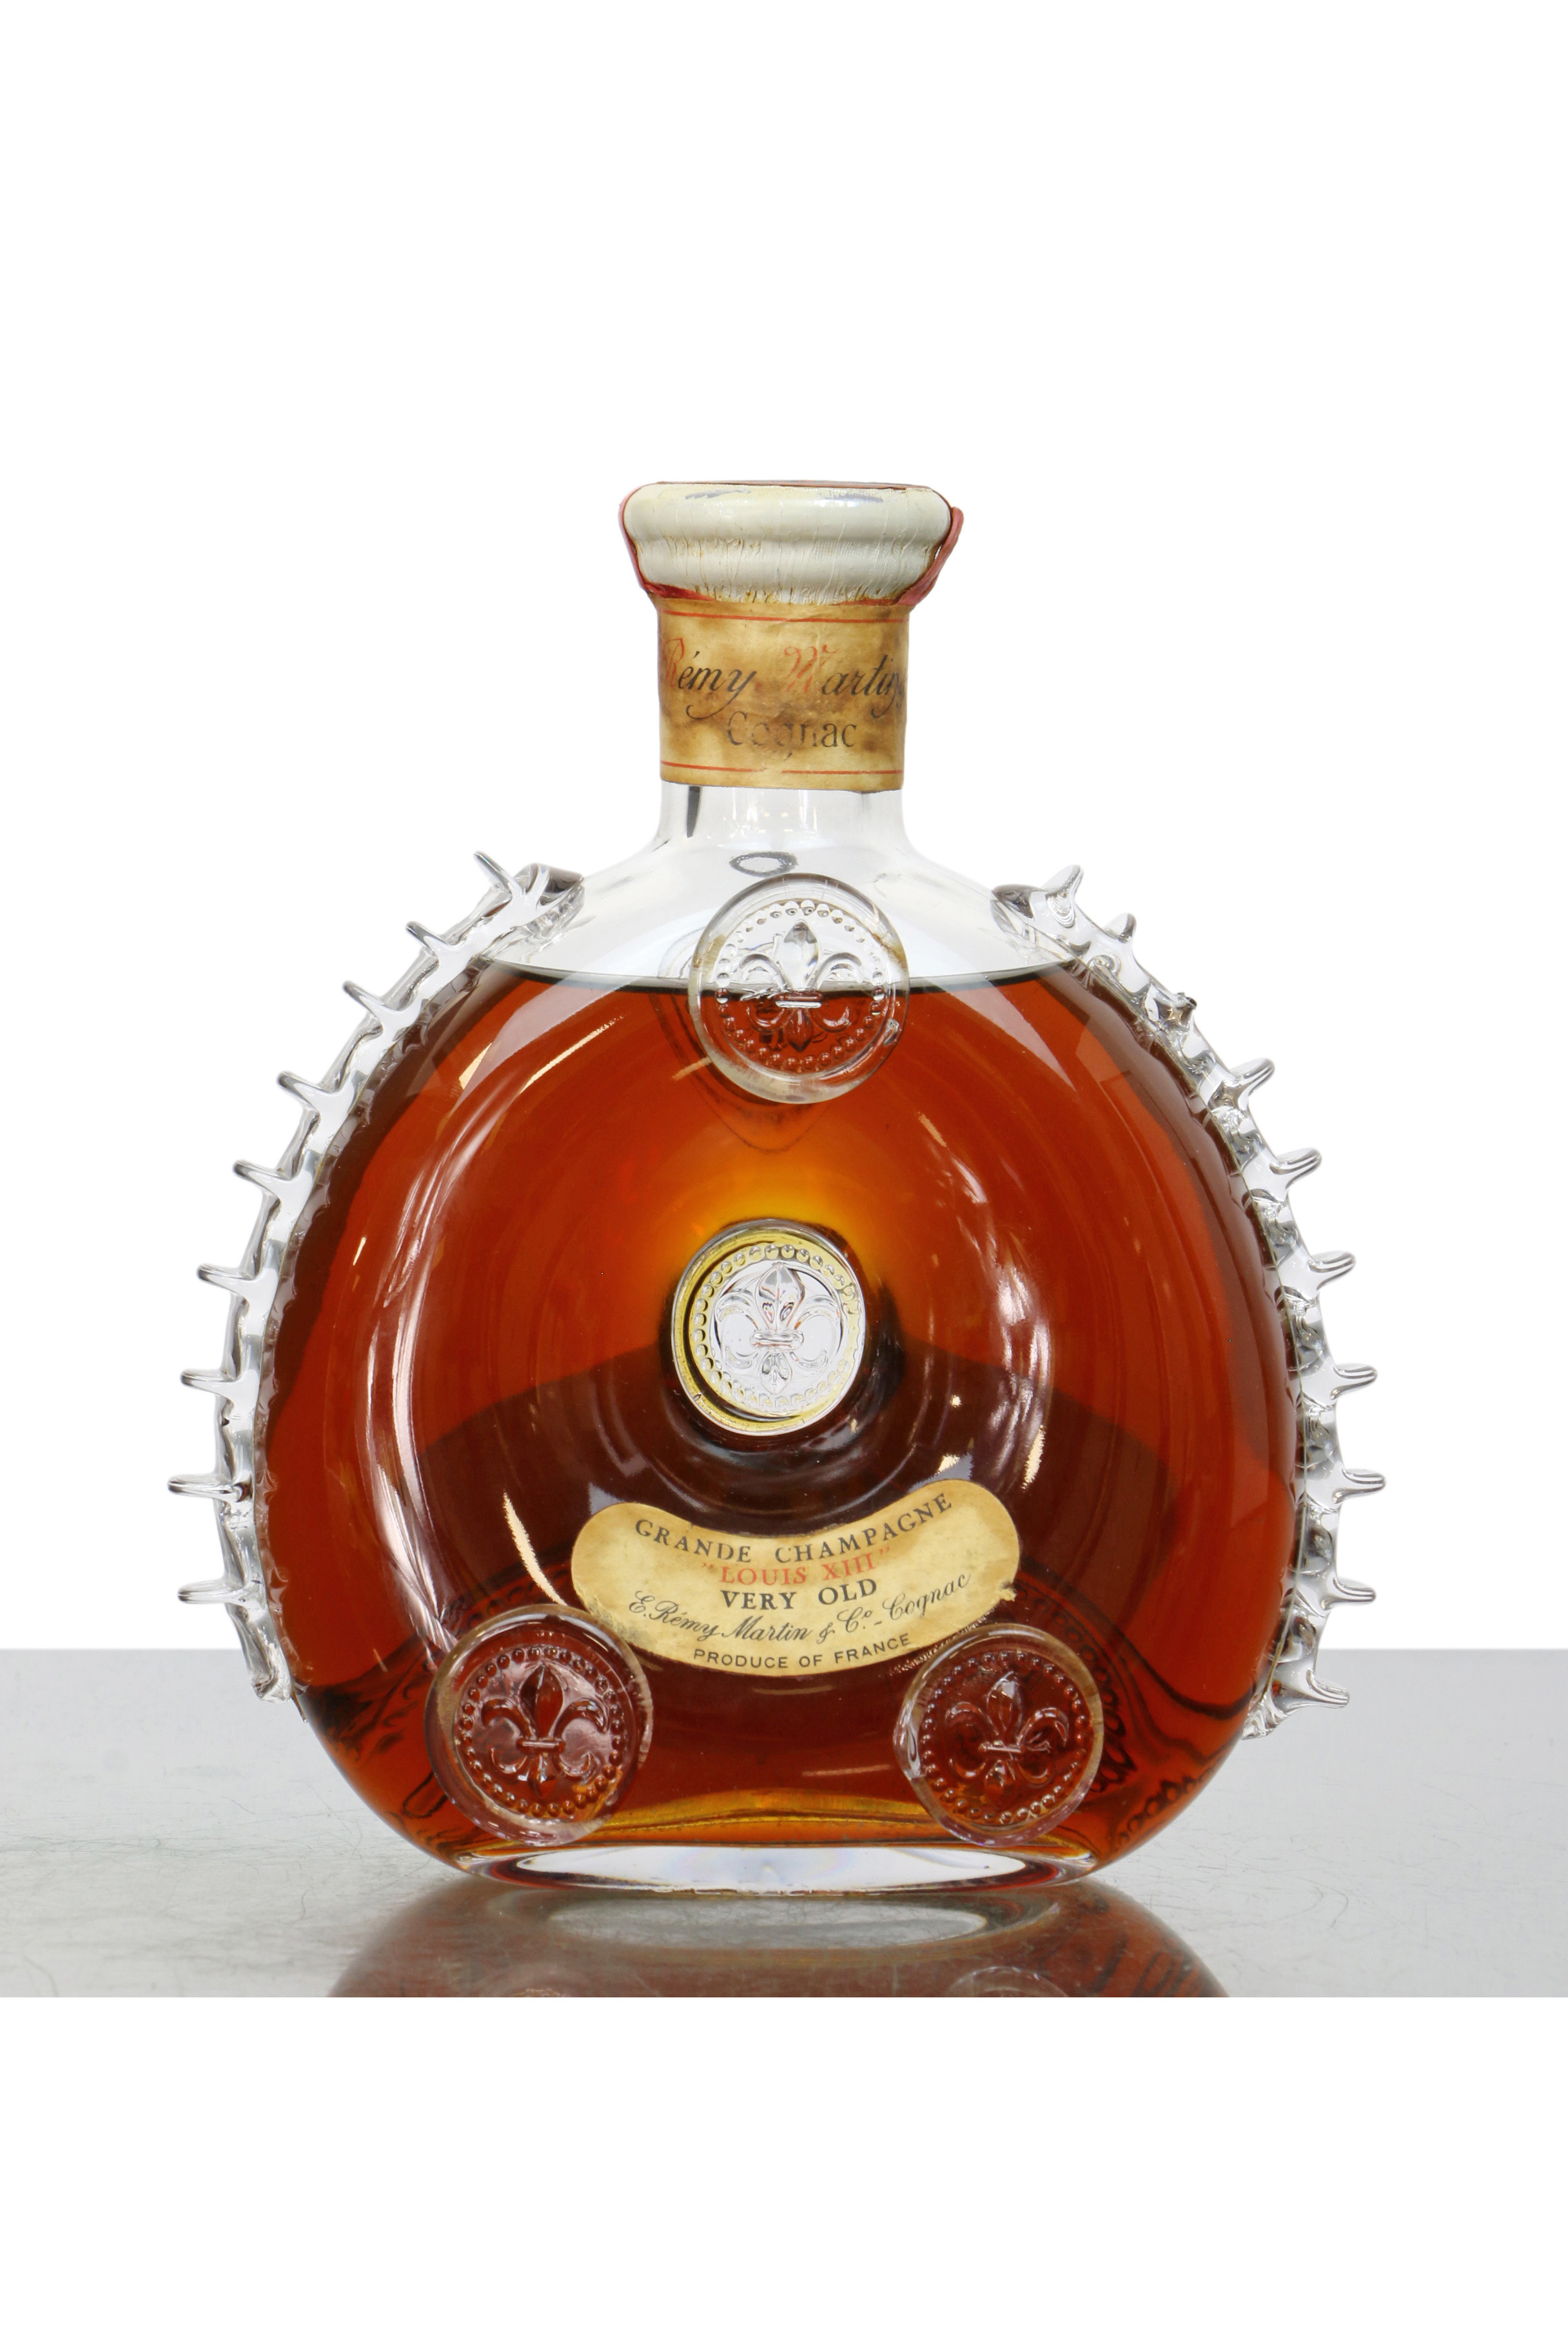 Remy Martin Louis XIII Cognac - Grande Champagne Decanter